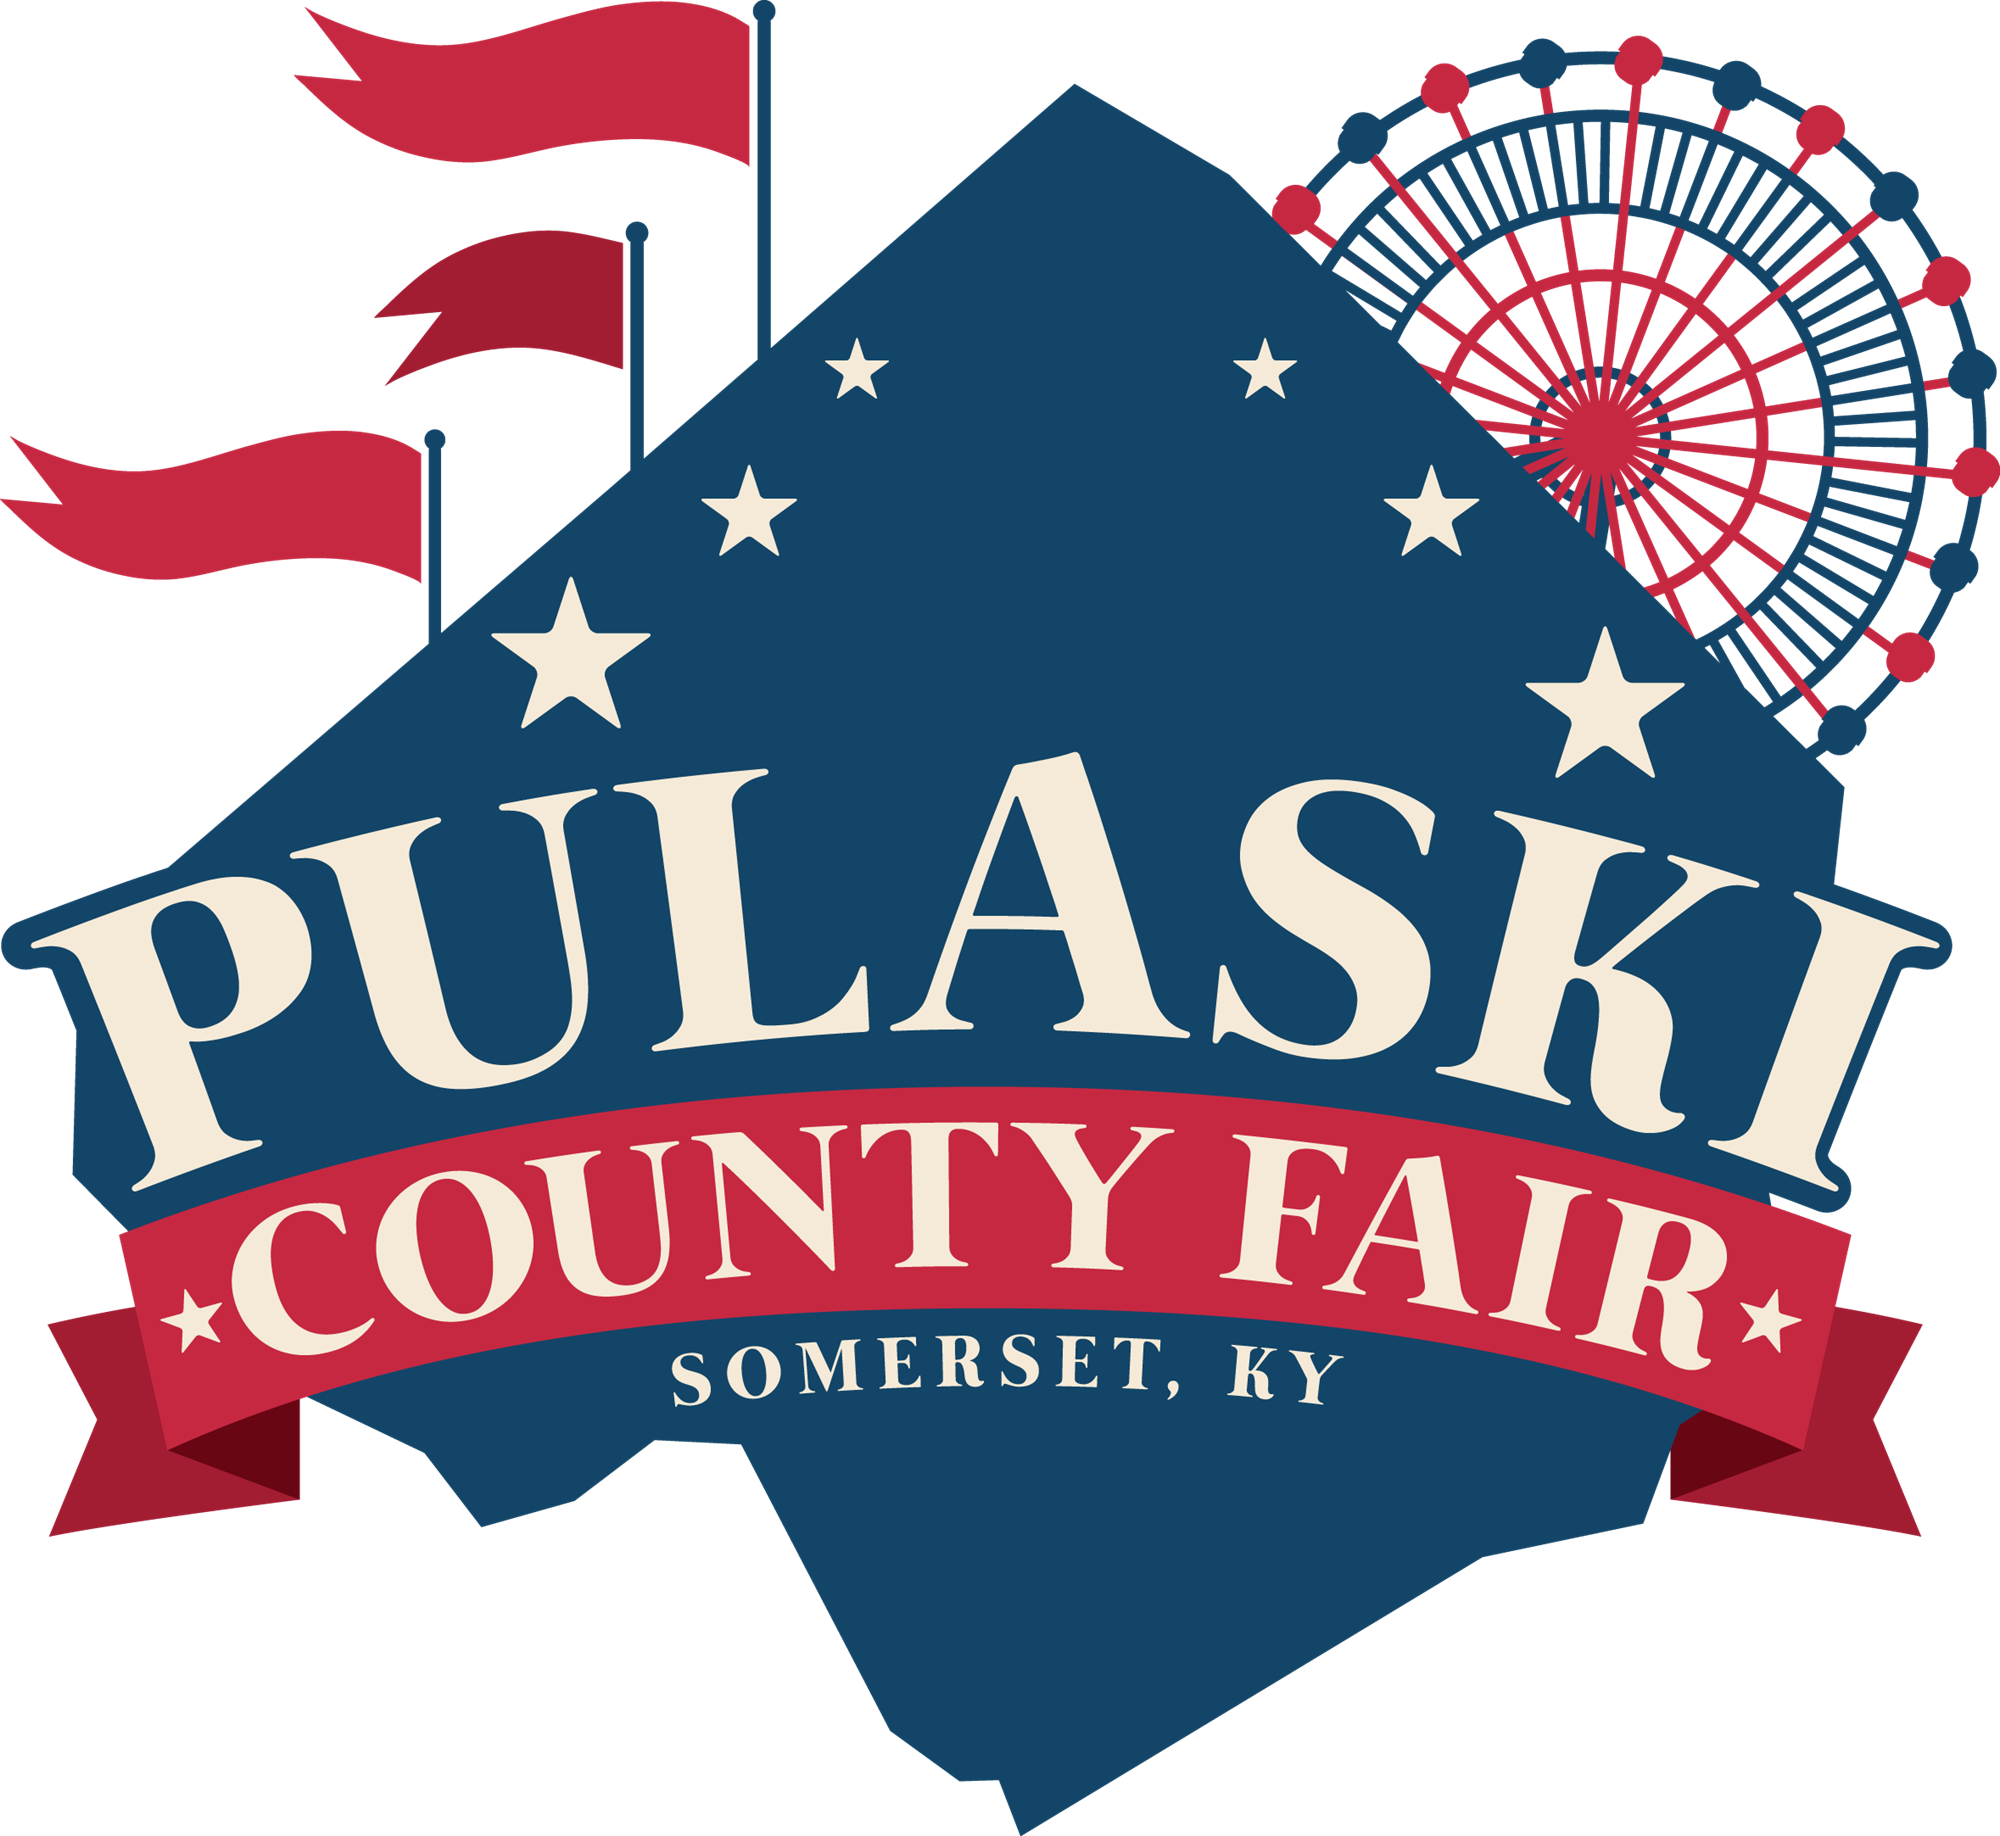 Pulaski County Fair